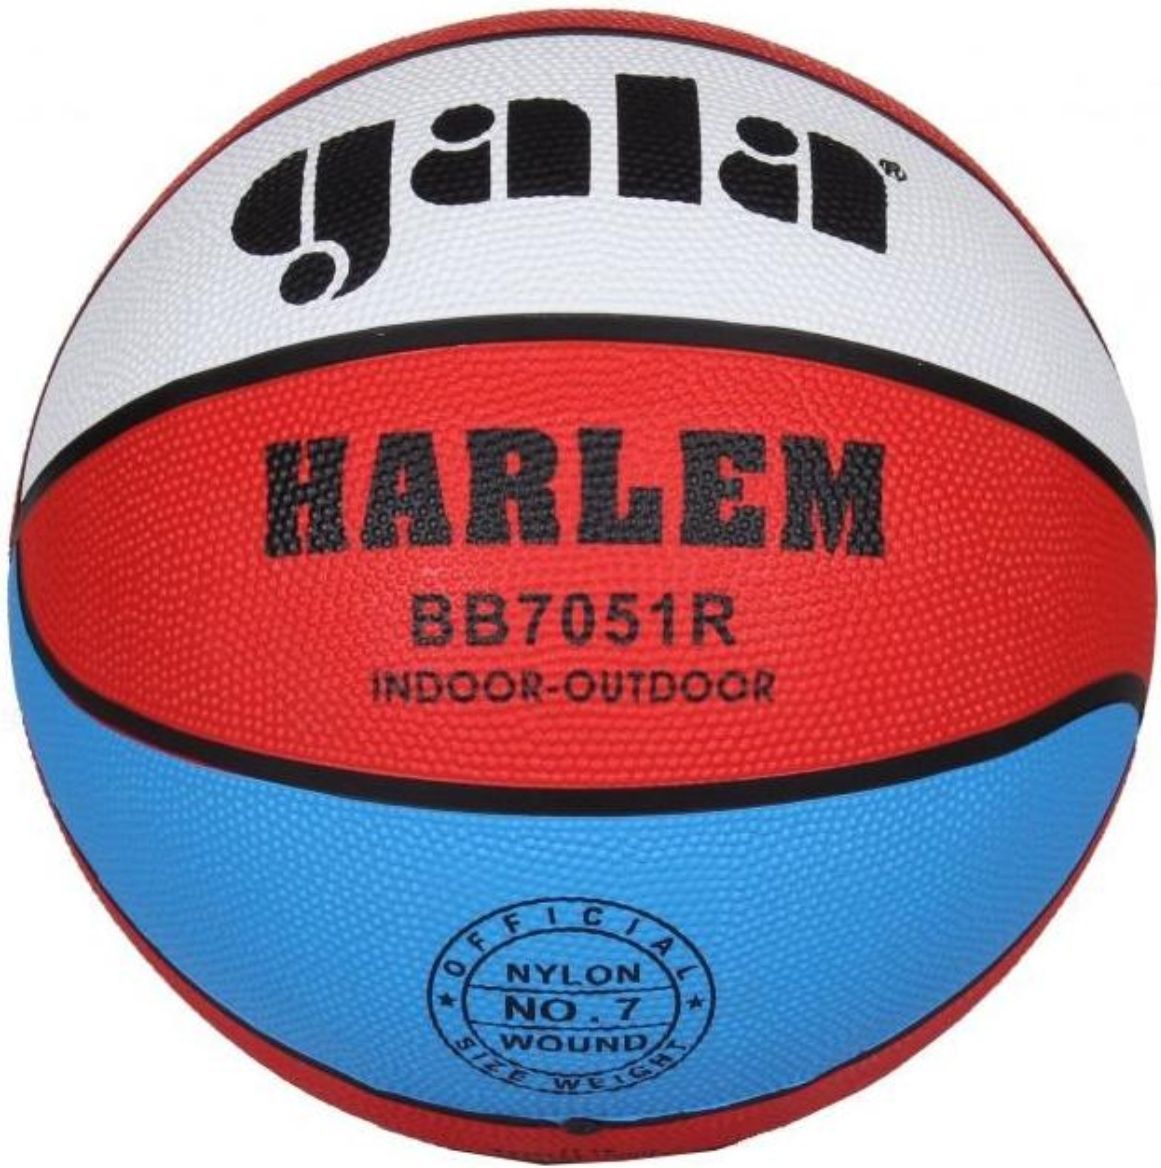 Basketbalový míč GALA Harlem BB7051R - obrázek 1